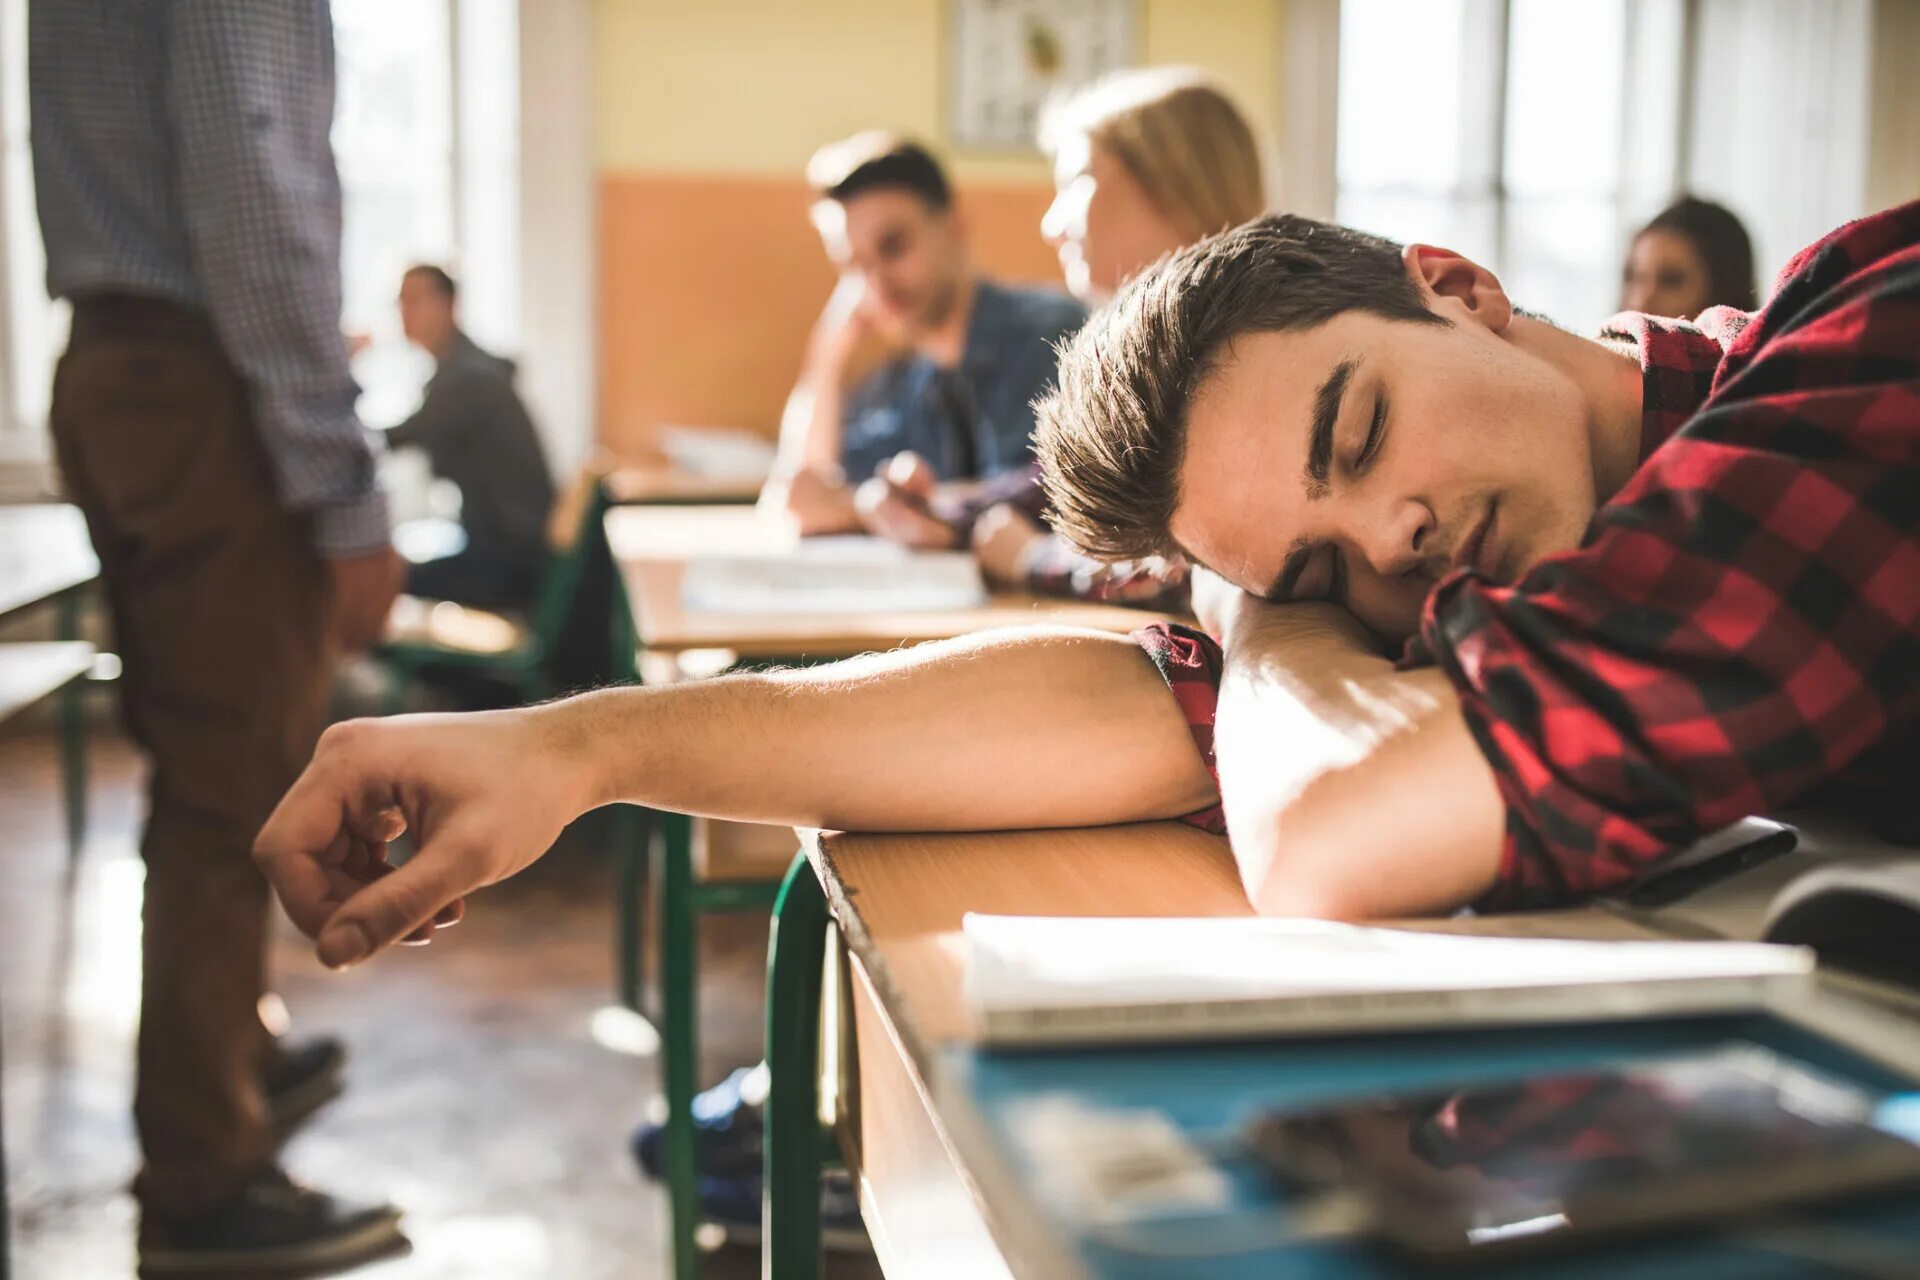 During school. Студент спит на паре. Спать на парах. Студенты спят на парах. Спящий студент на паре.